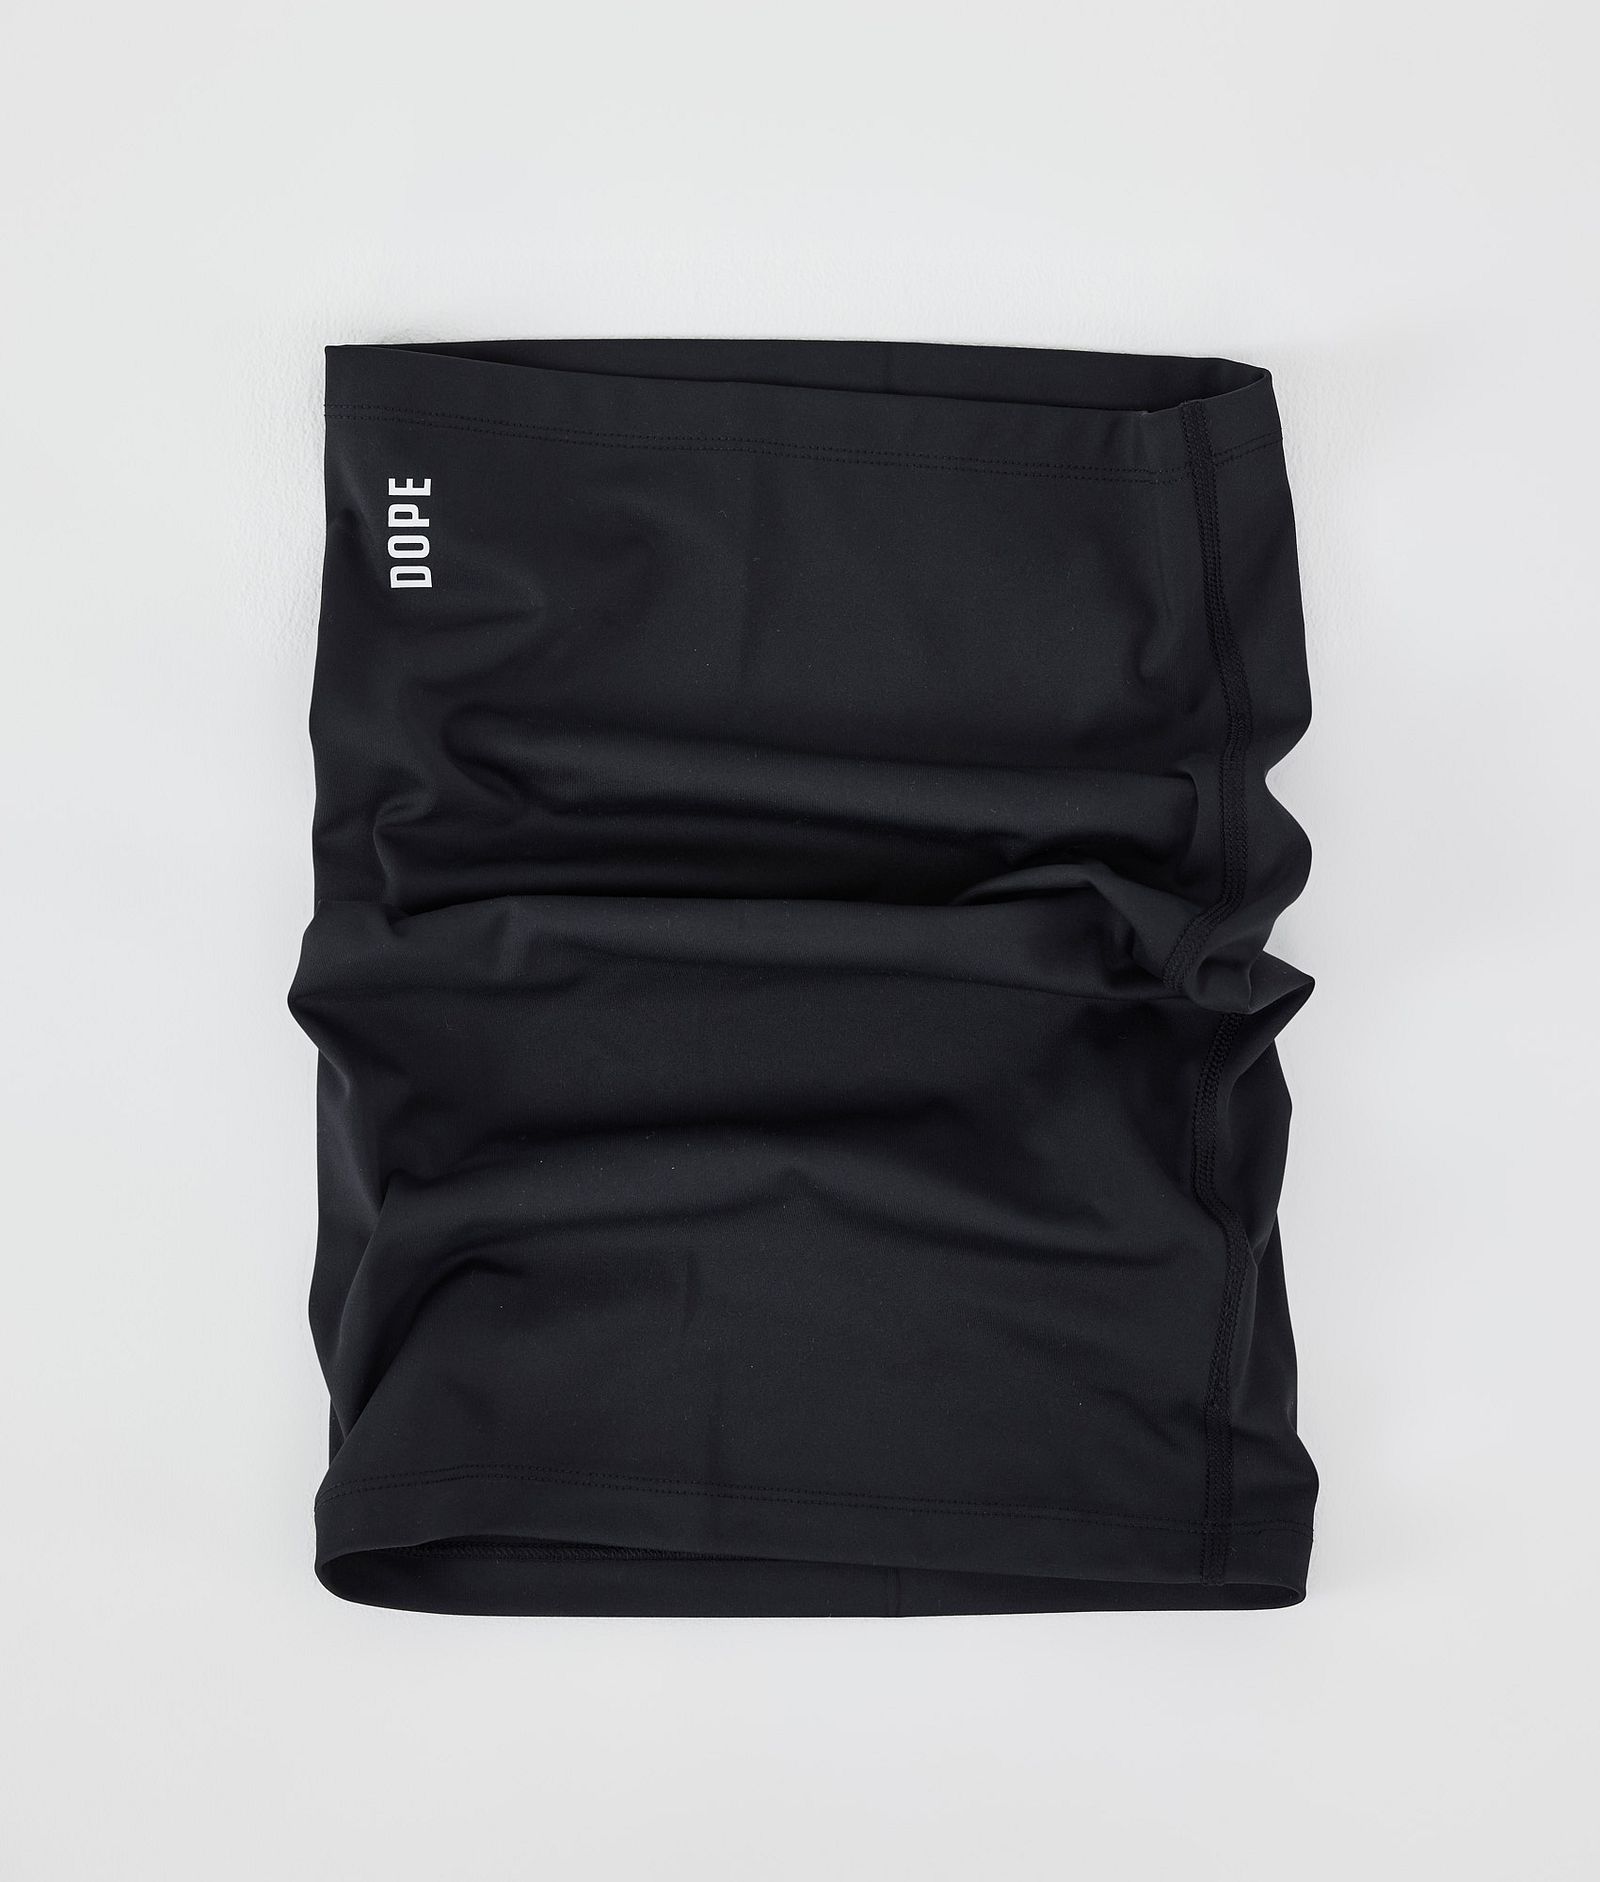 Dope Snuggle Camiseta Térmica Hombre 2X-Up Black